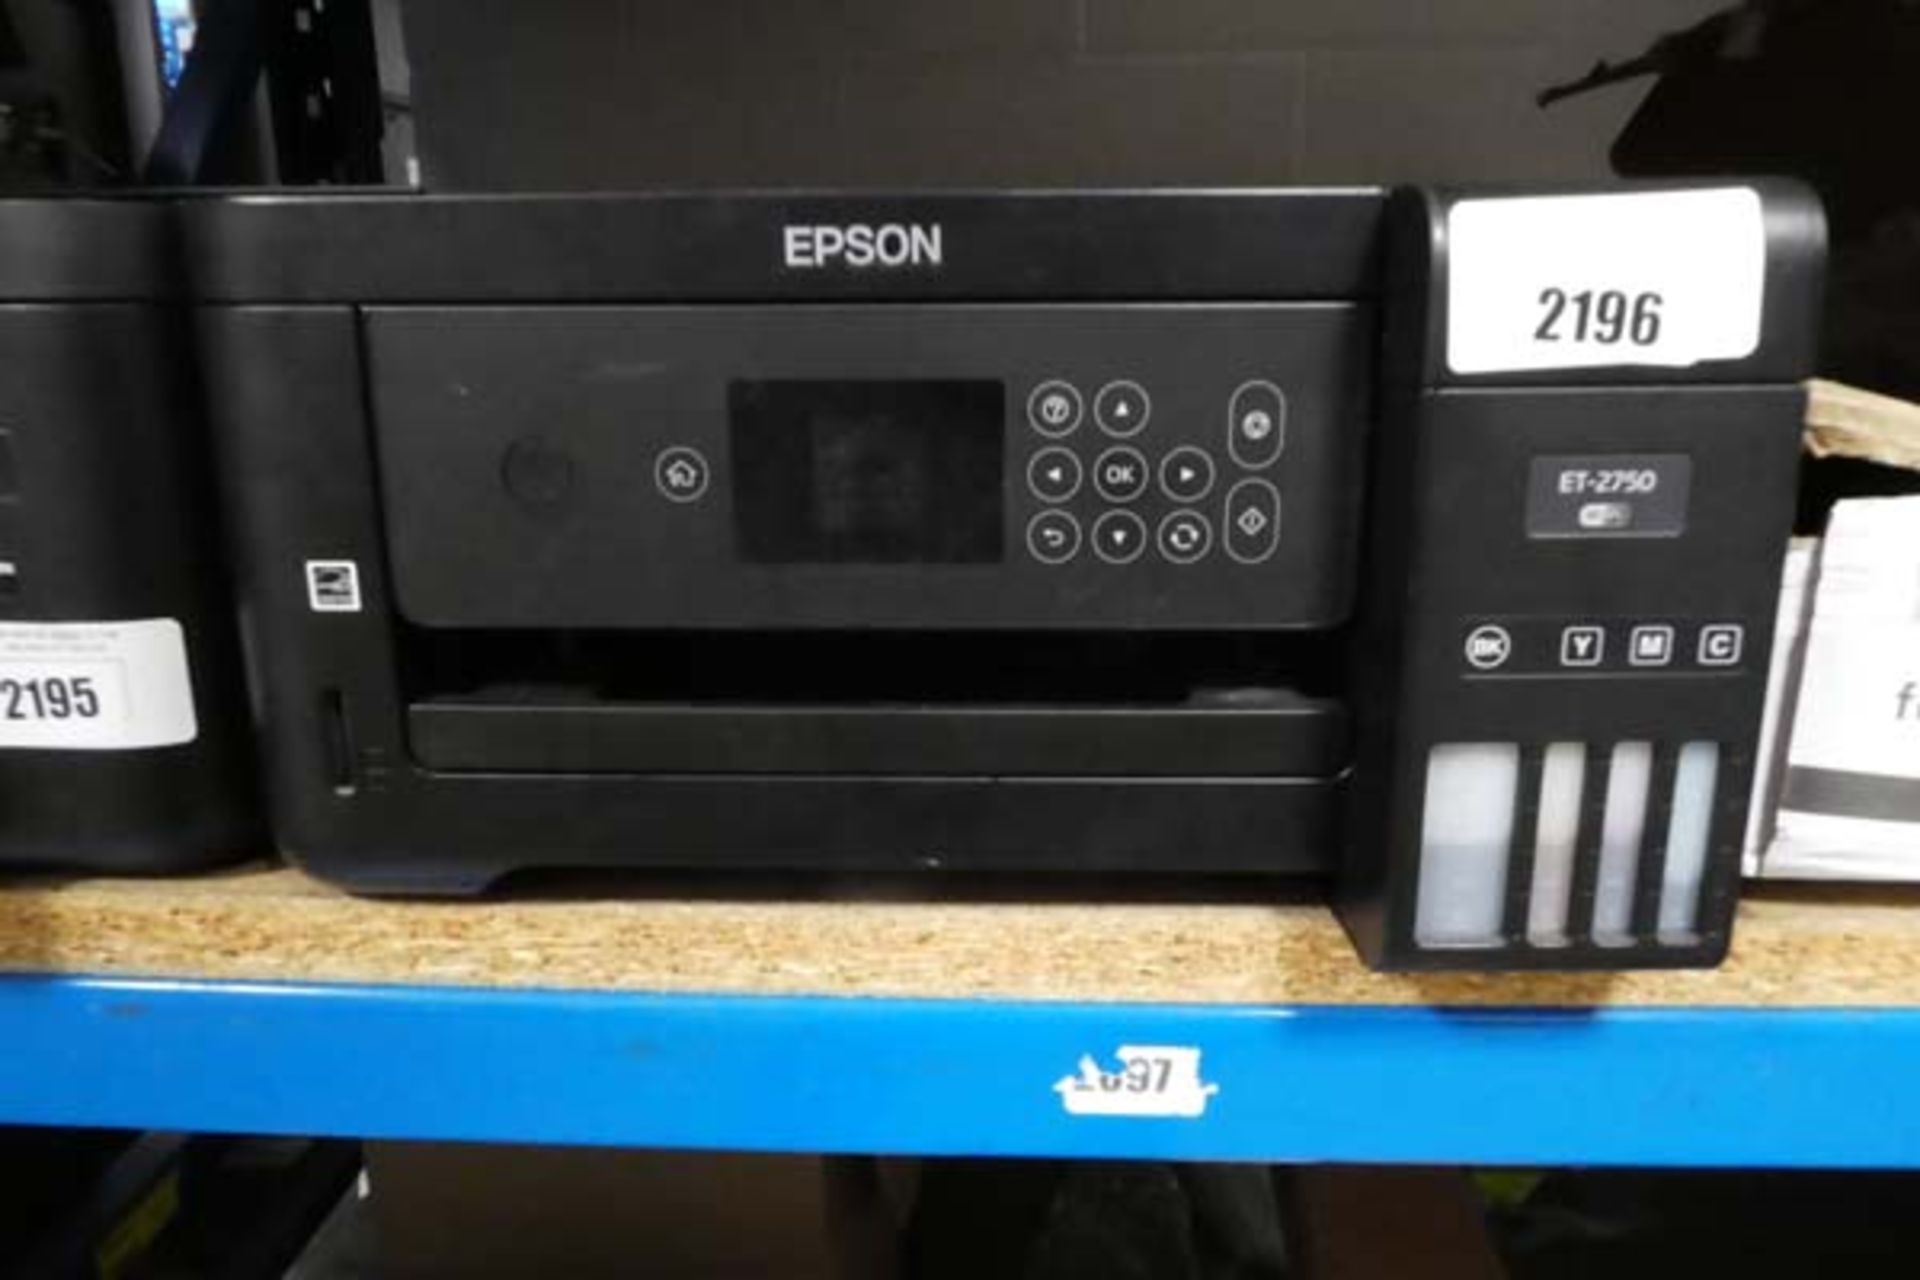 Epson Ecotank 2750 all in one printer